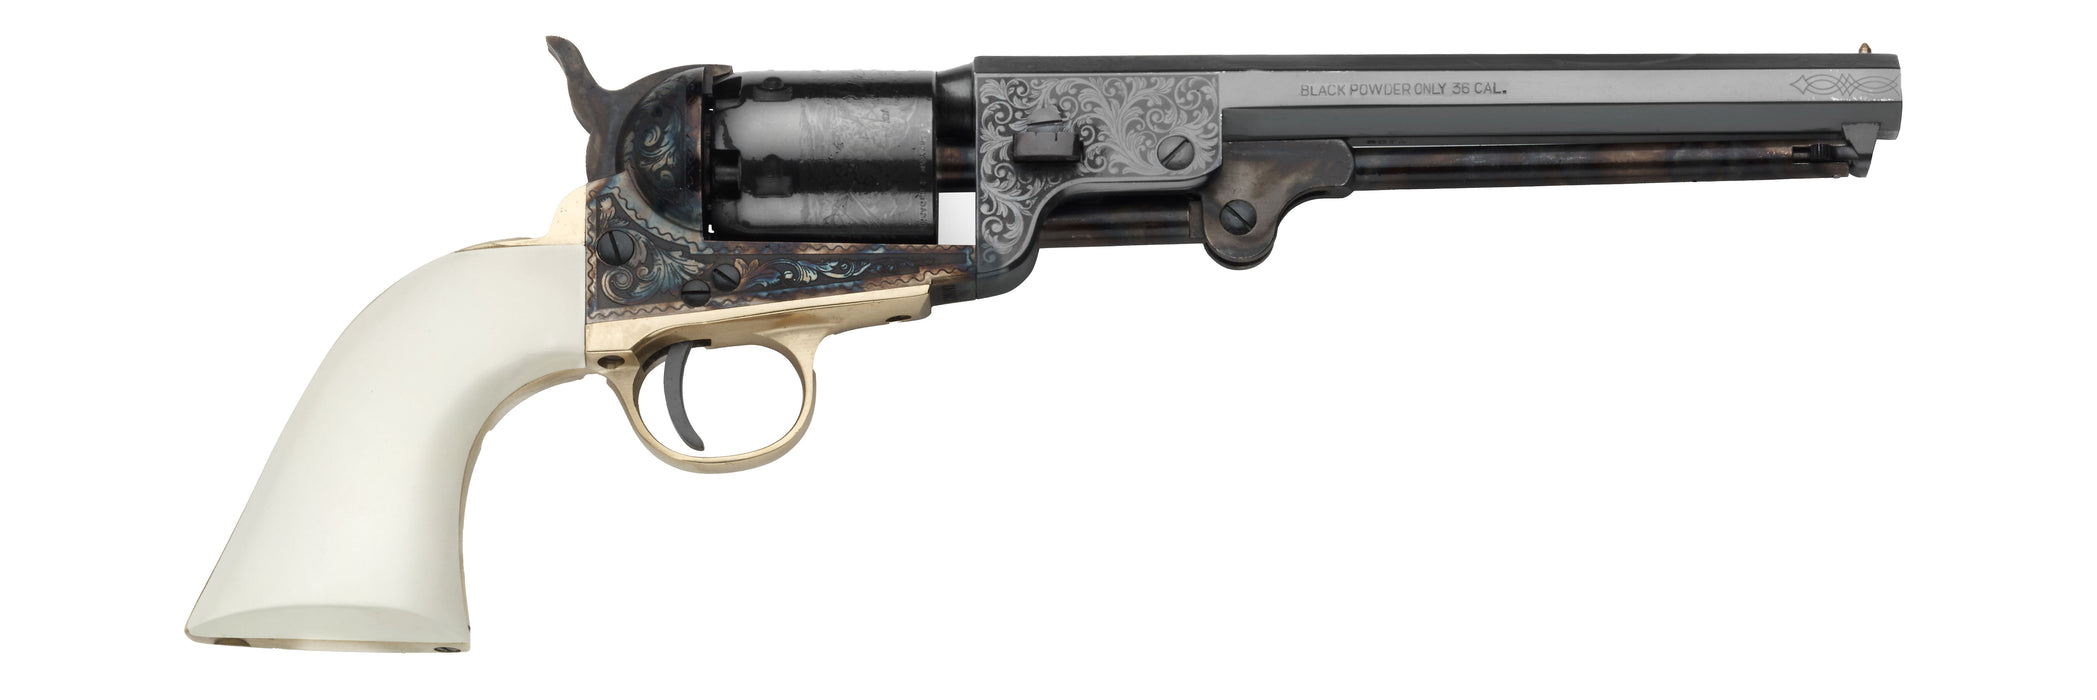 Pietta™ 1851 Navy Deluxe Engraved Black Powder Revolver Pistol - 7.5" Barrel - .36 Caliber - Ivory Grip